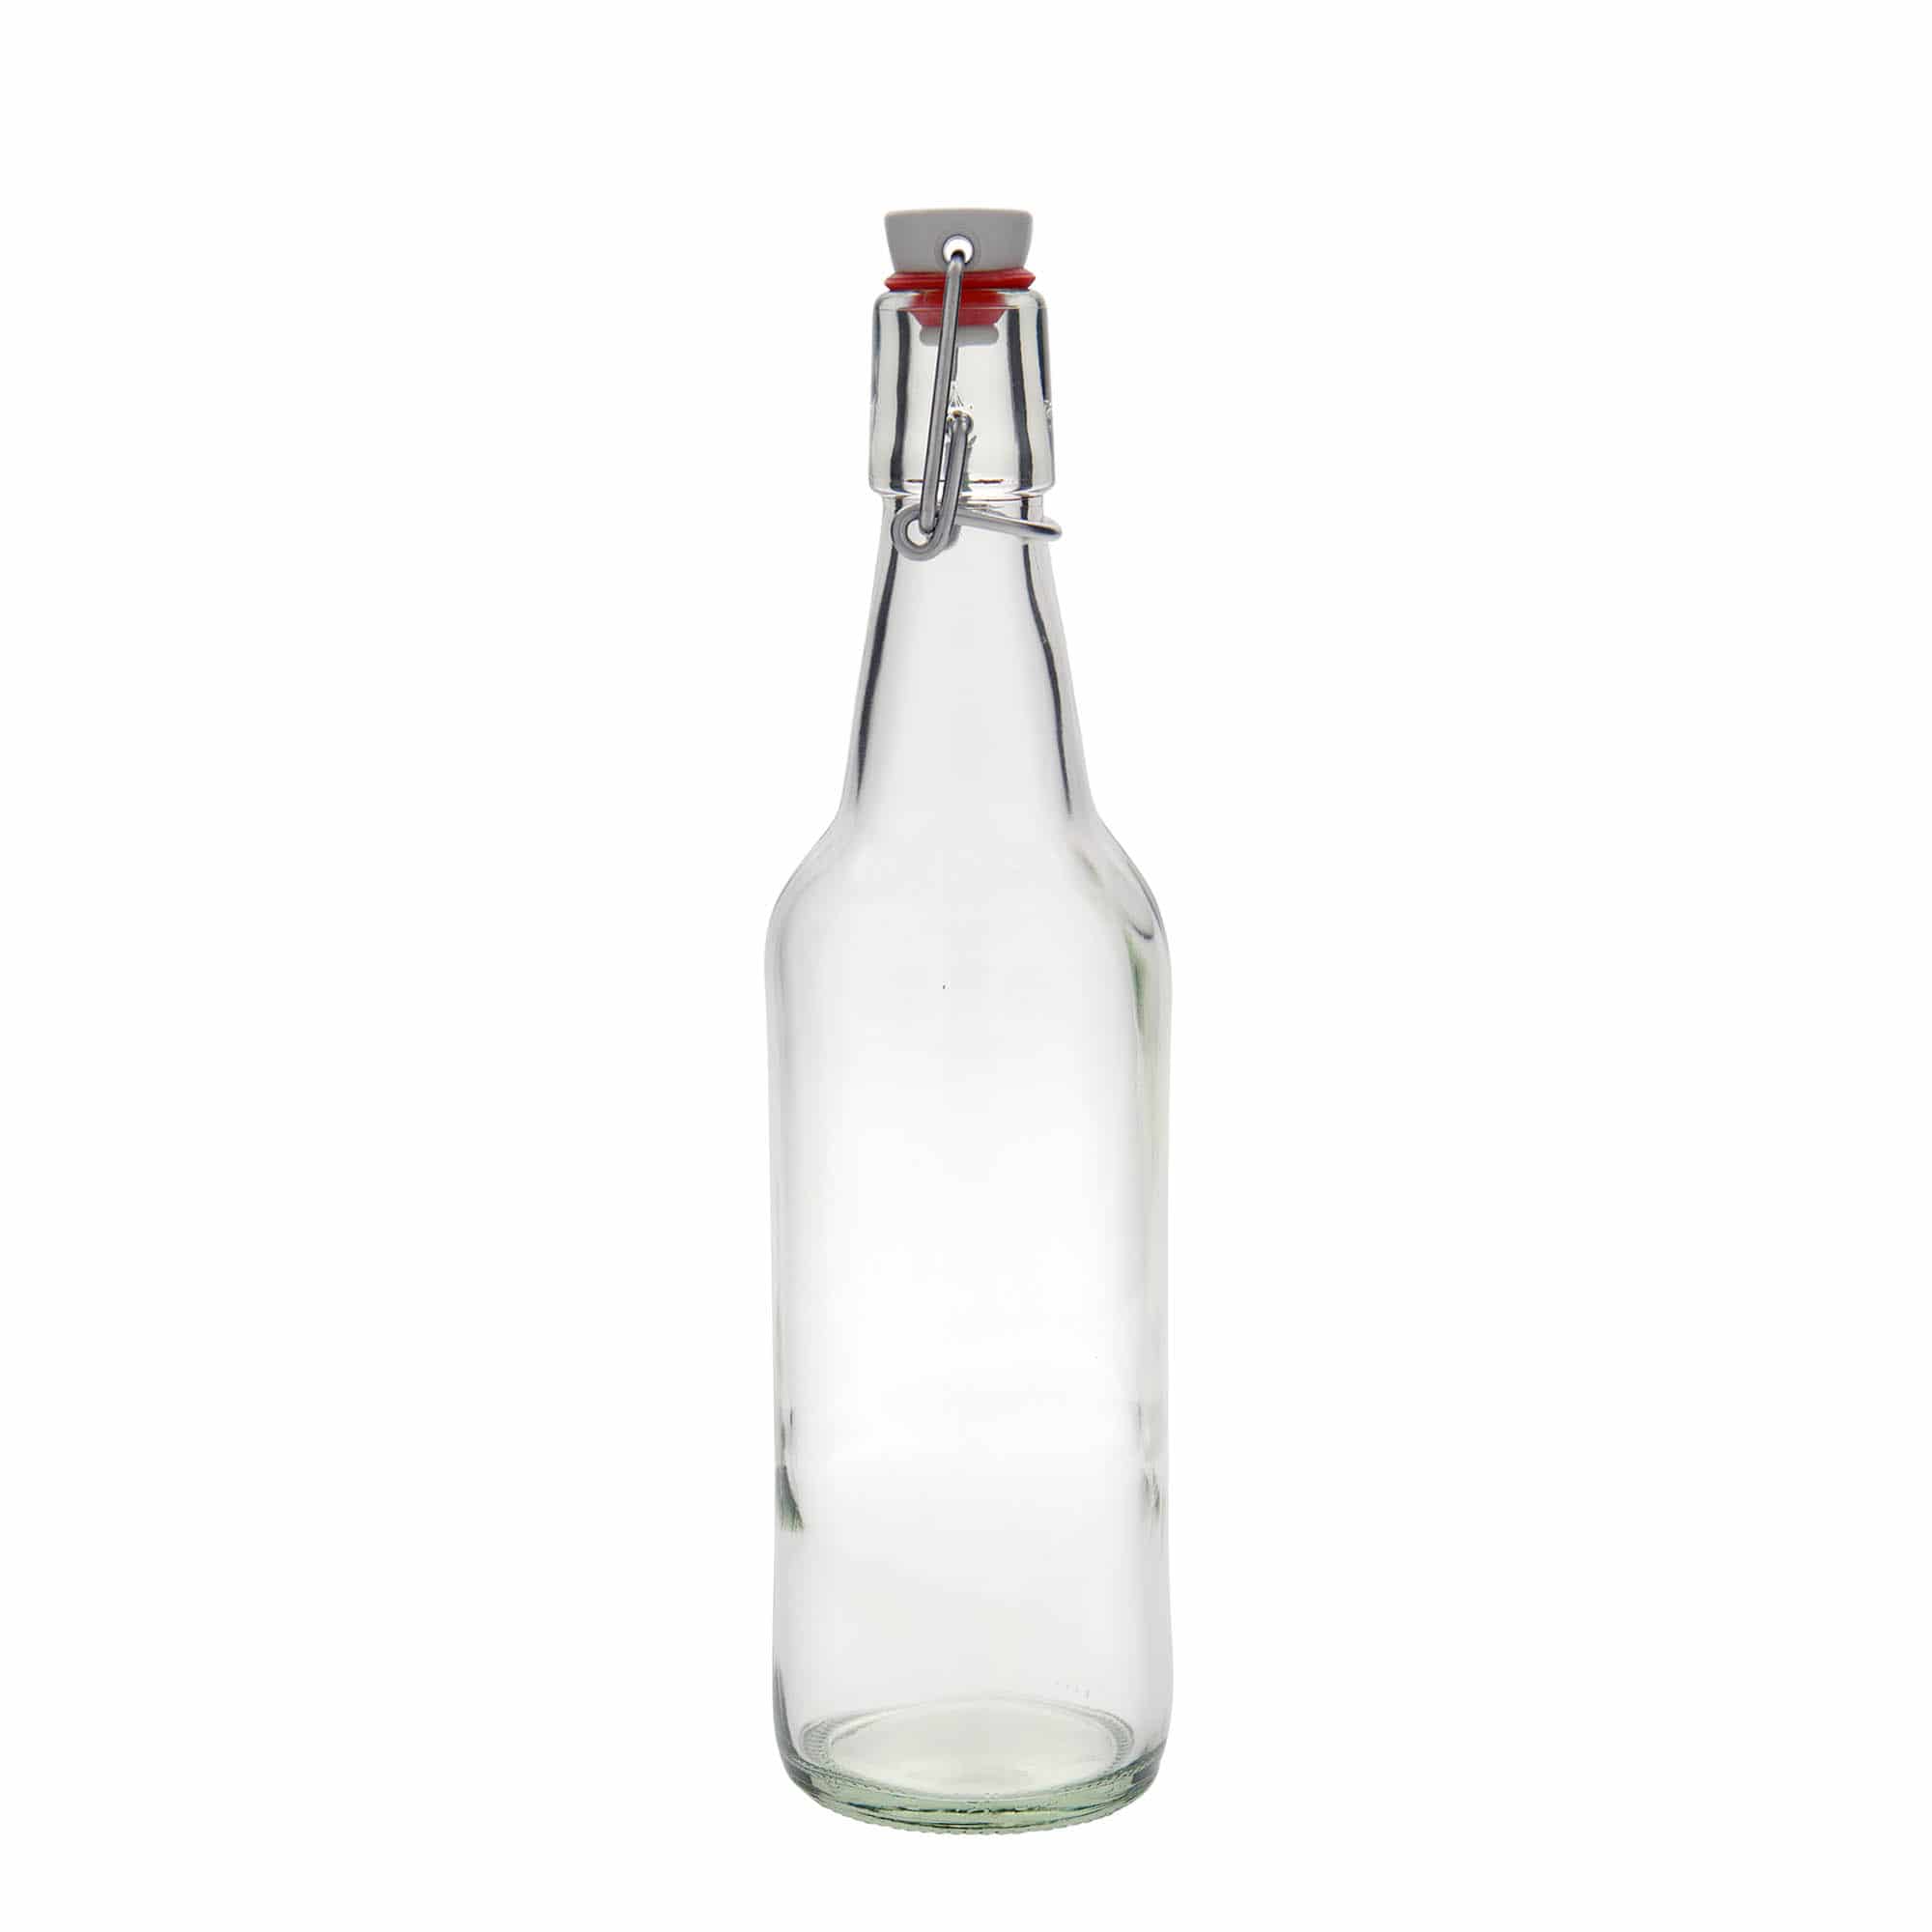 500 ml beer bottle, glass, closure: swing top